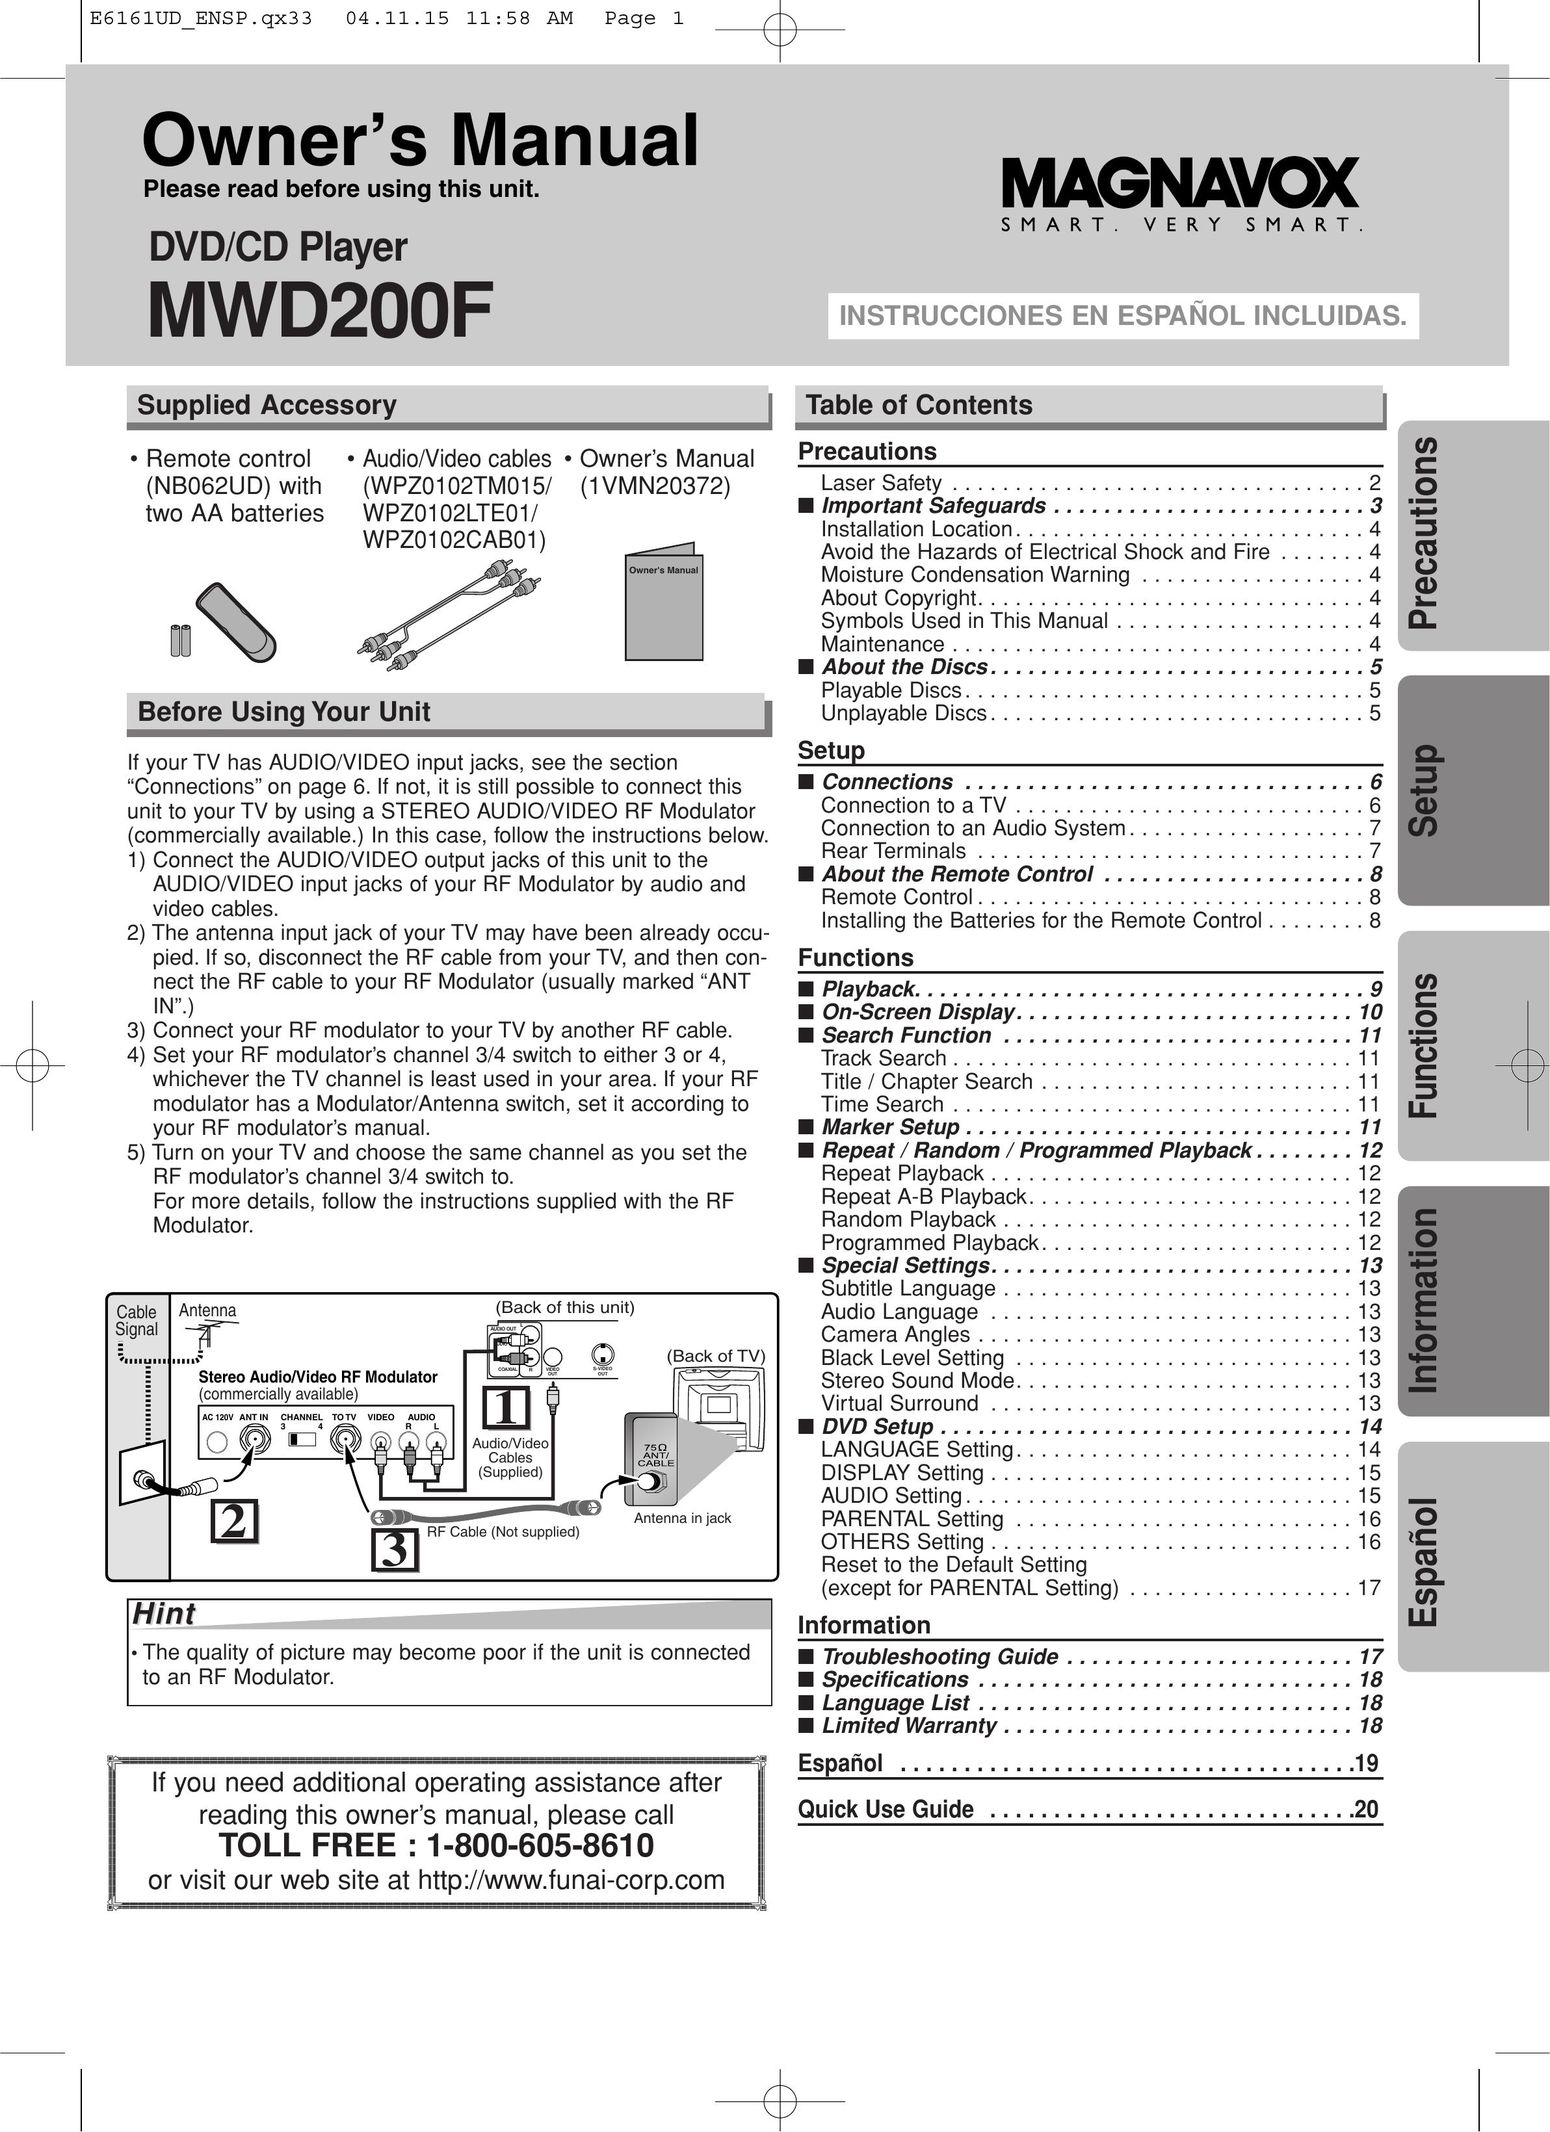 Magnavox MWD200F DVD Player User Manual